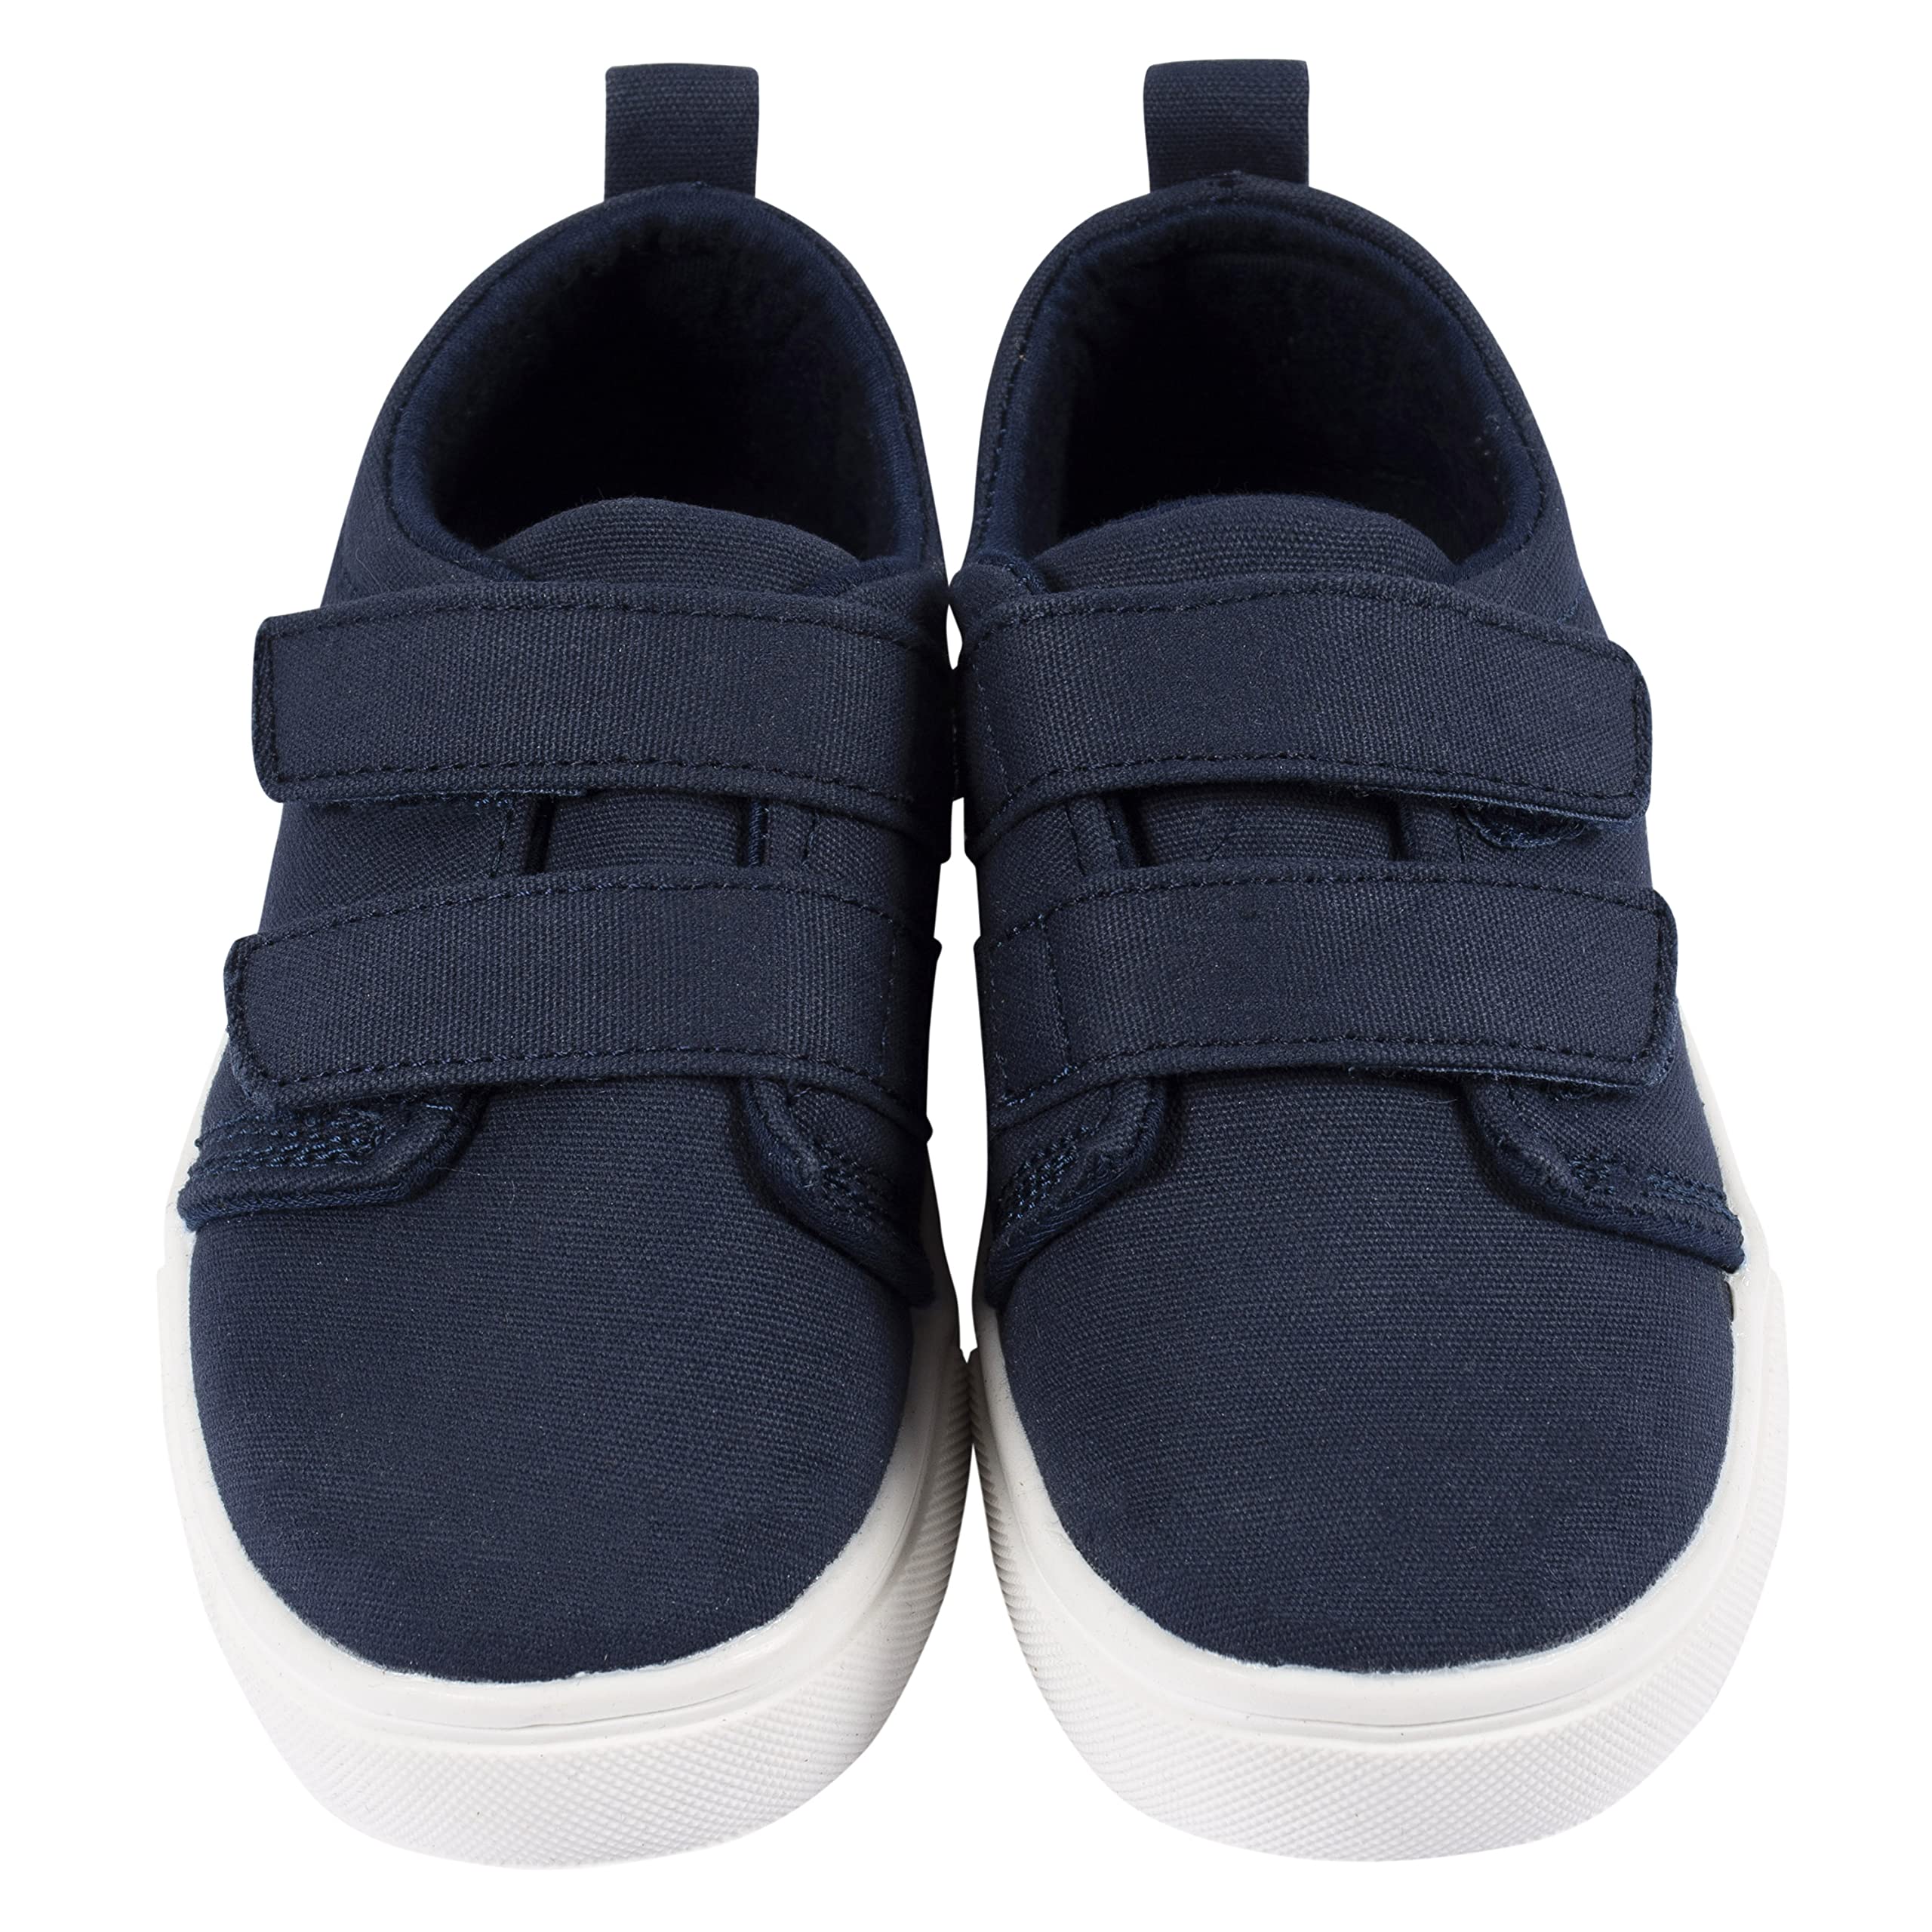 Gerber Unisex-Child Sneakers Crib Shoes Newborn Infant Toddler Neutral Boy Girl